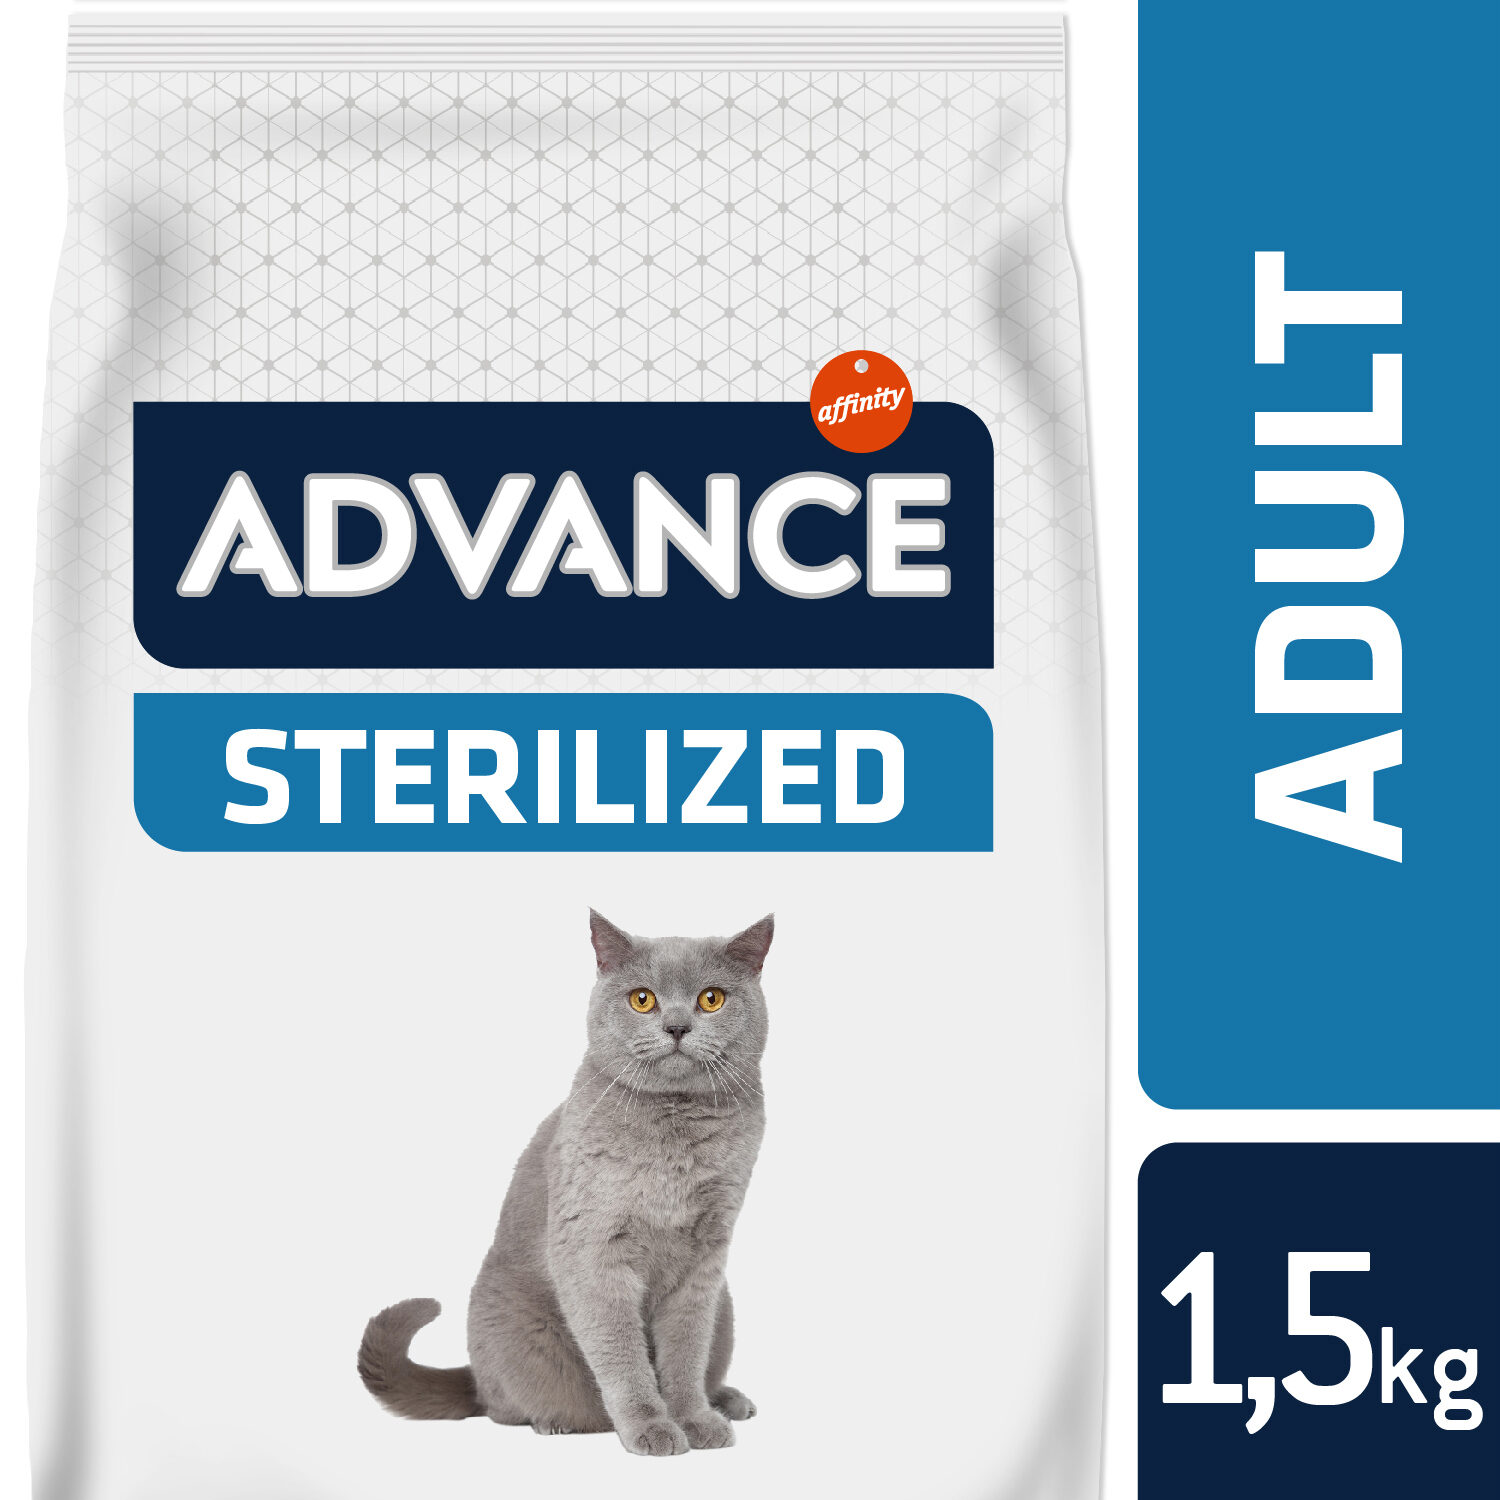 Affinity Advance Sterilized - Pute - Katze - 1,5 kg von Affinity